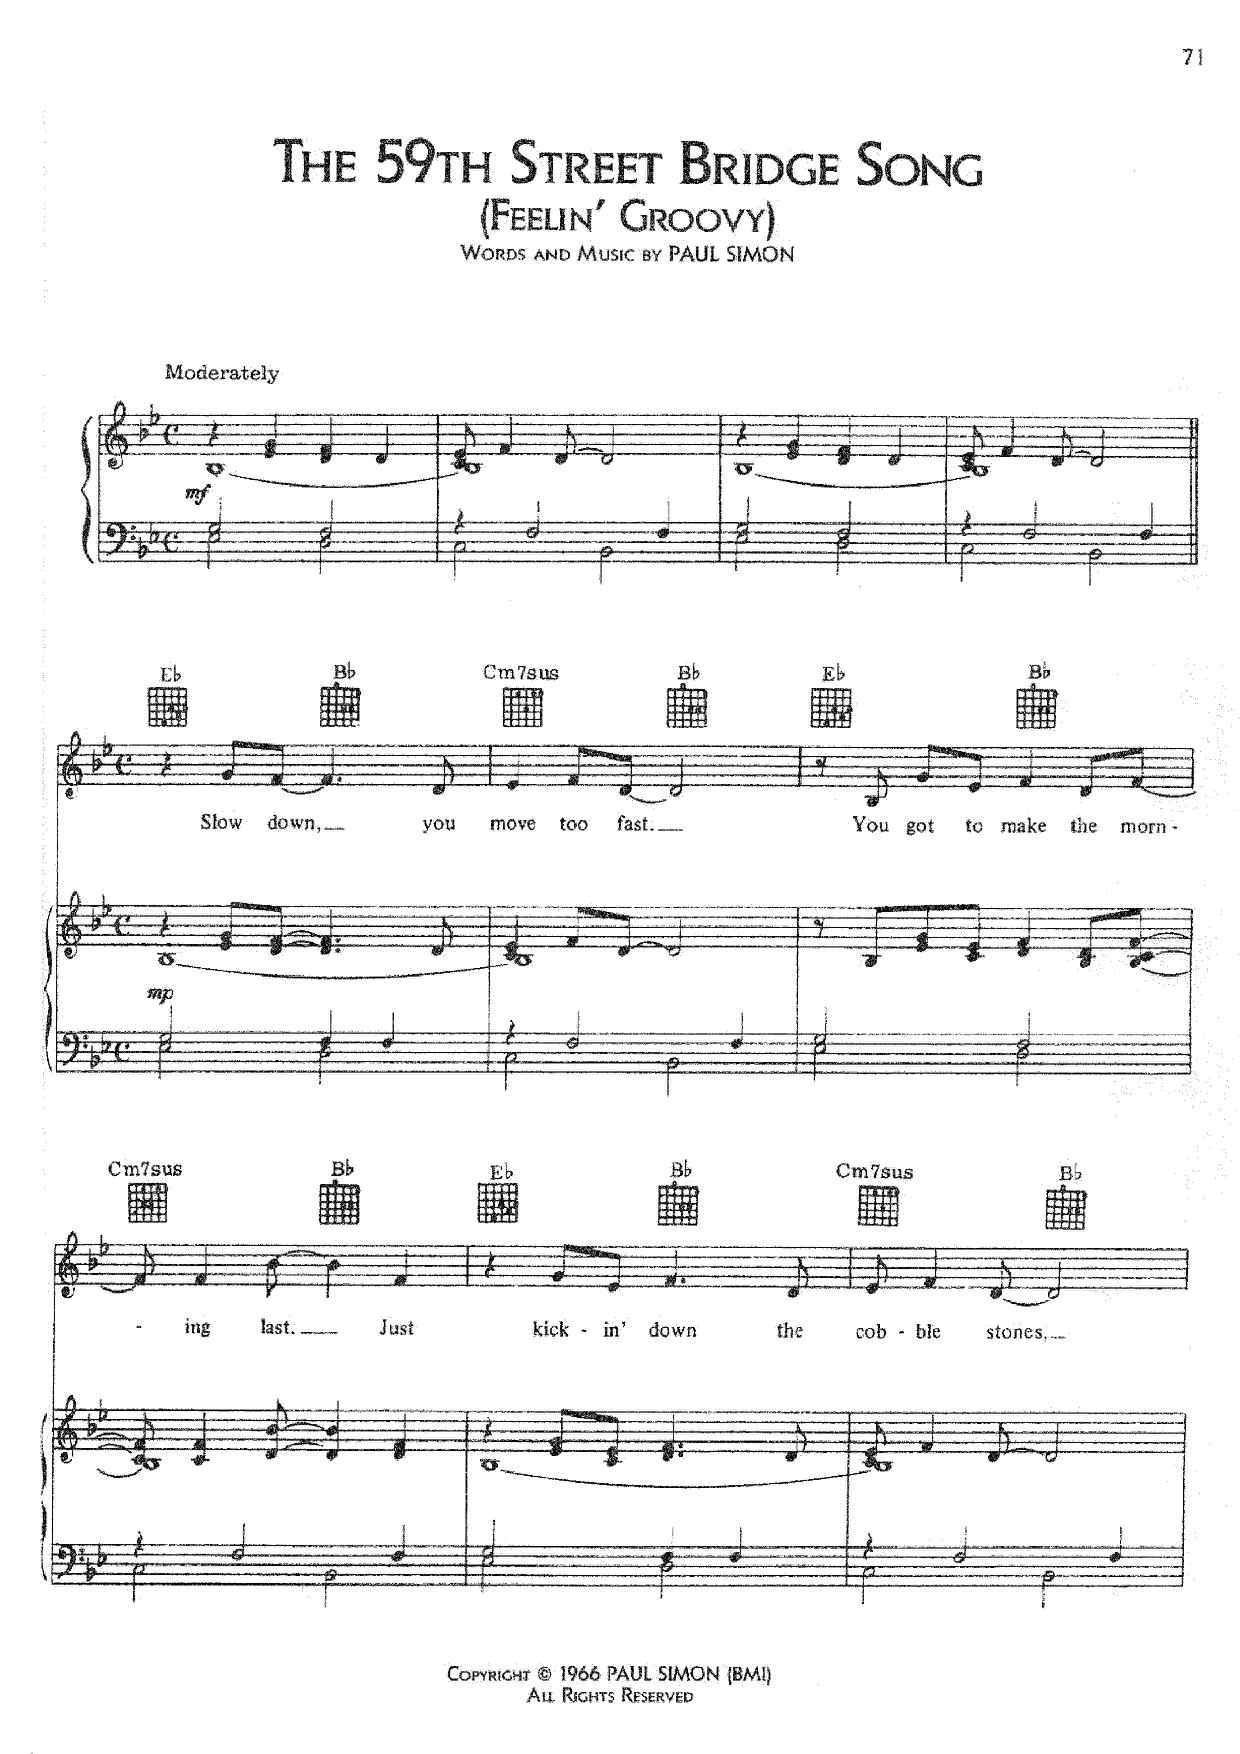 The 59th Street Bridge Song Score